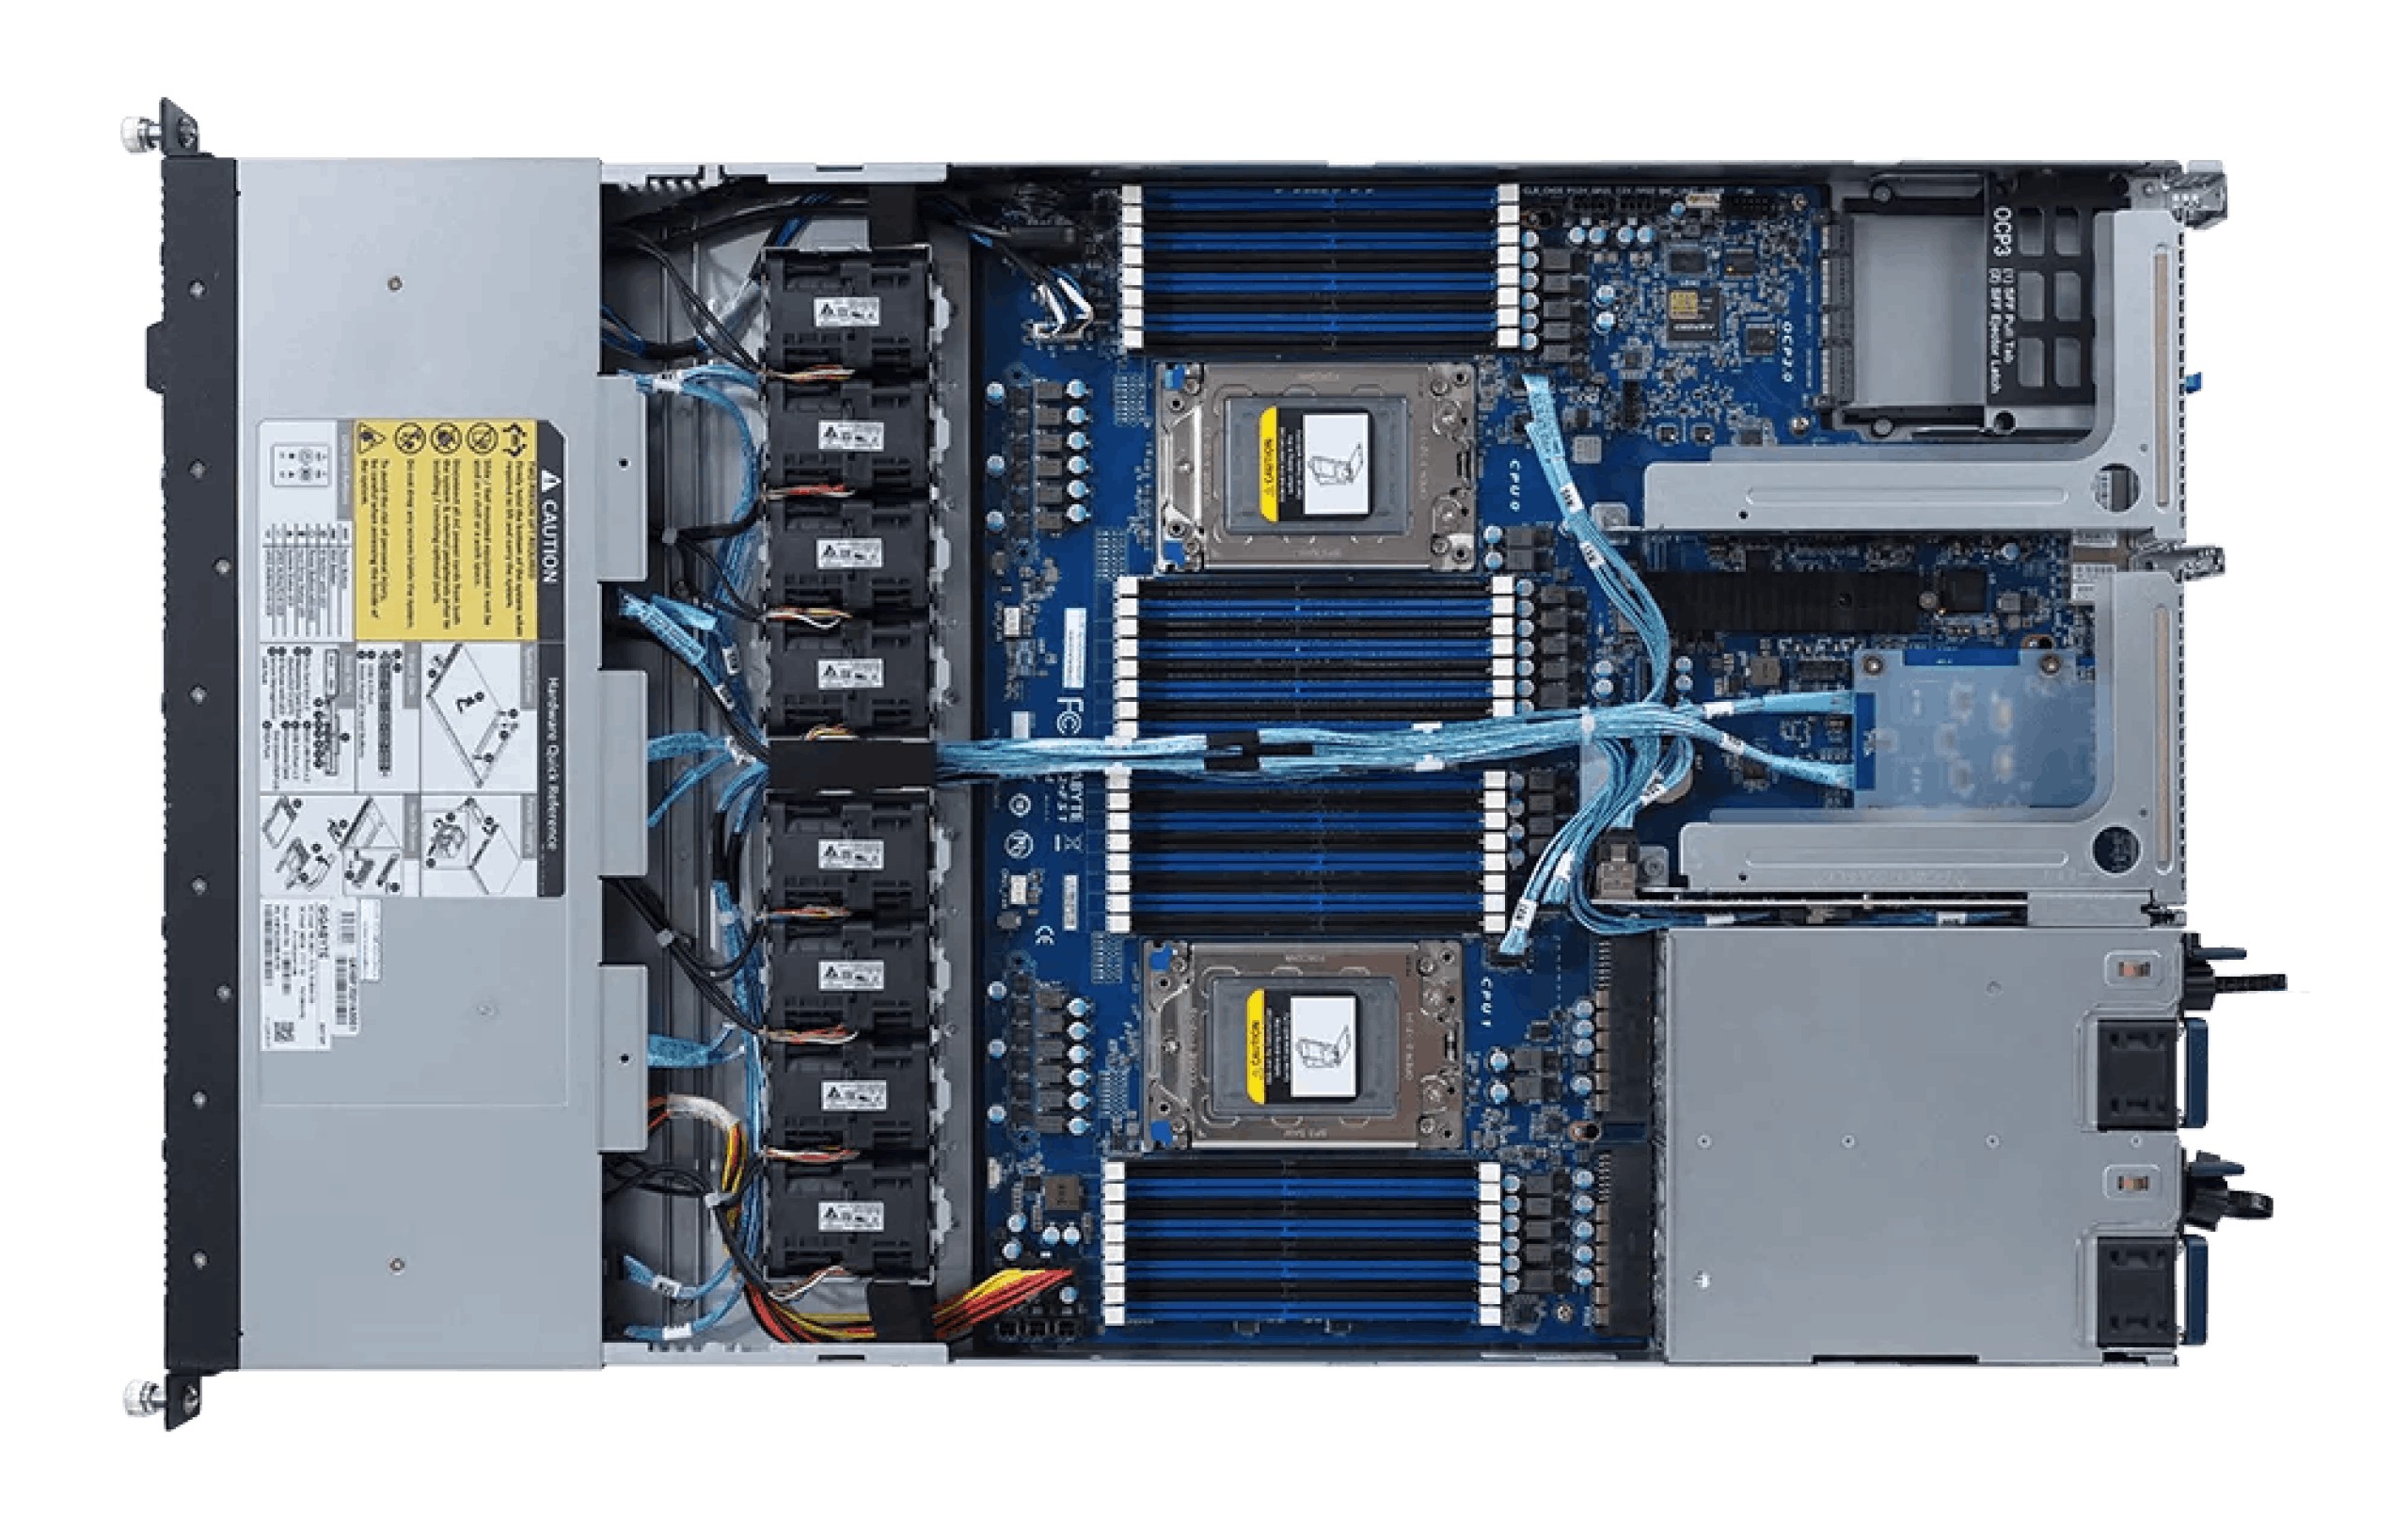 Internal view of the Eland Pro 1U server